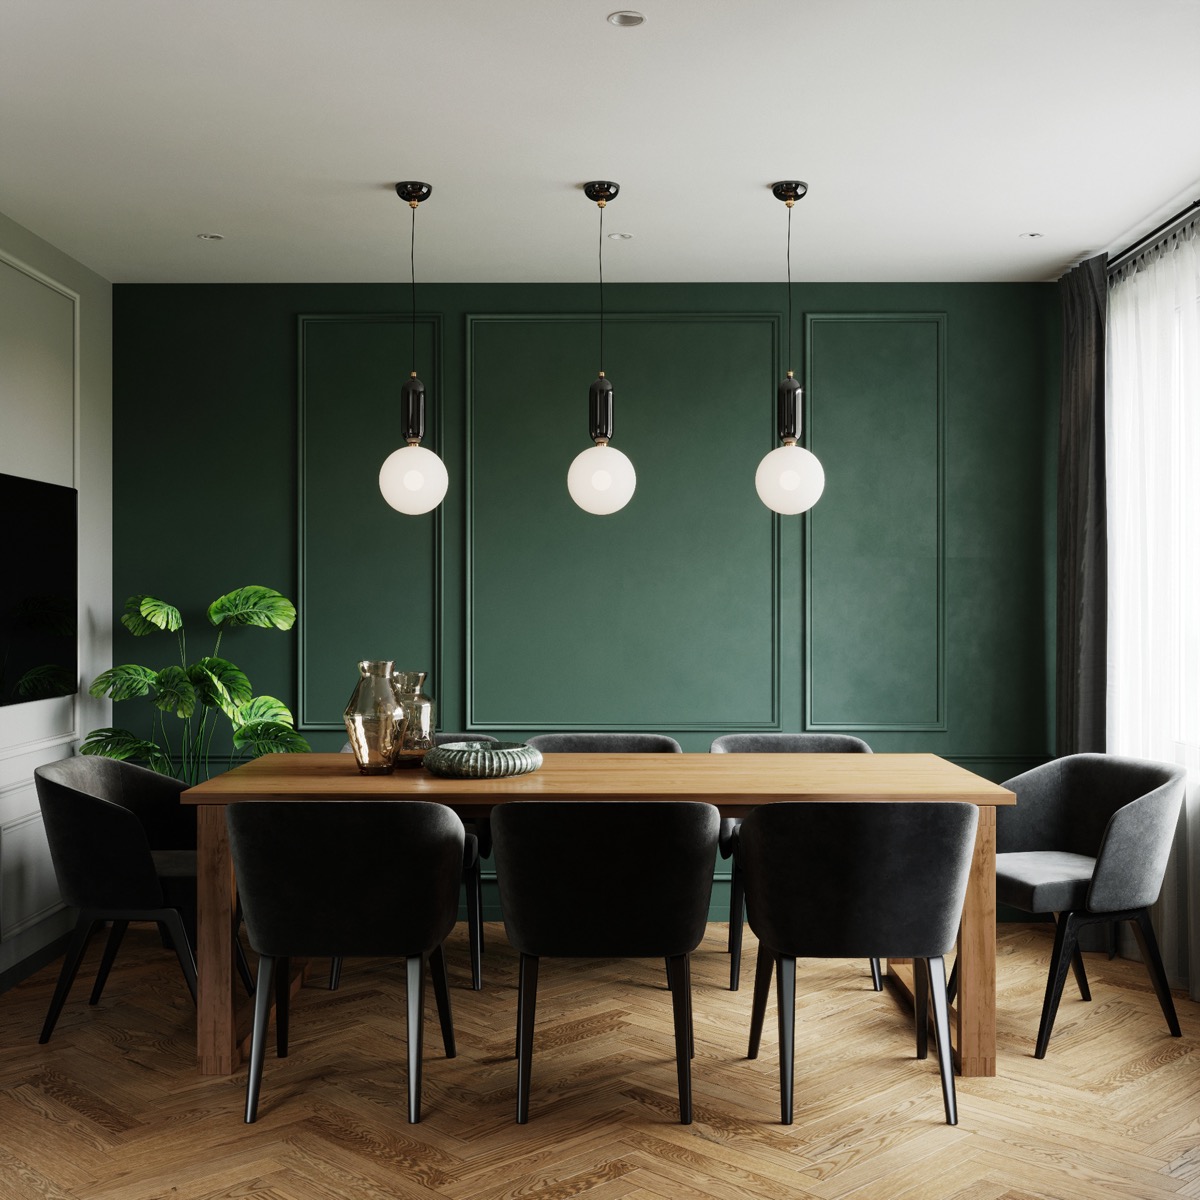 emerald-green-dining-room-600x600.jpg